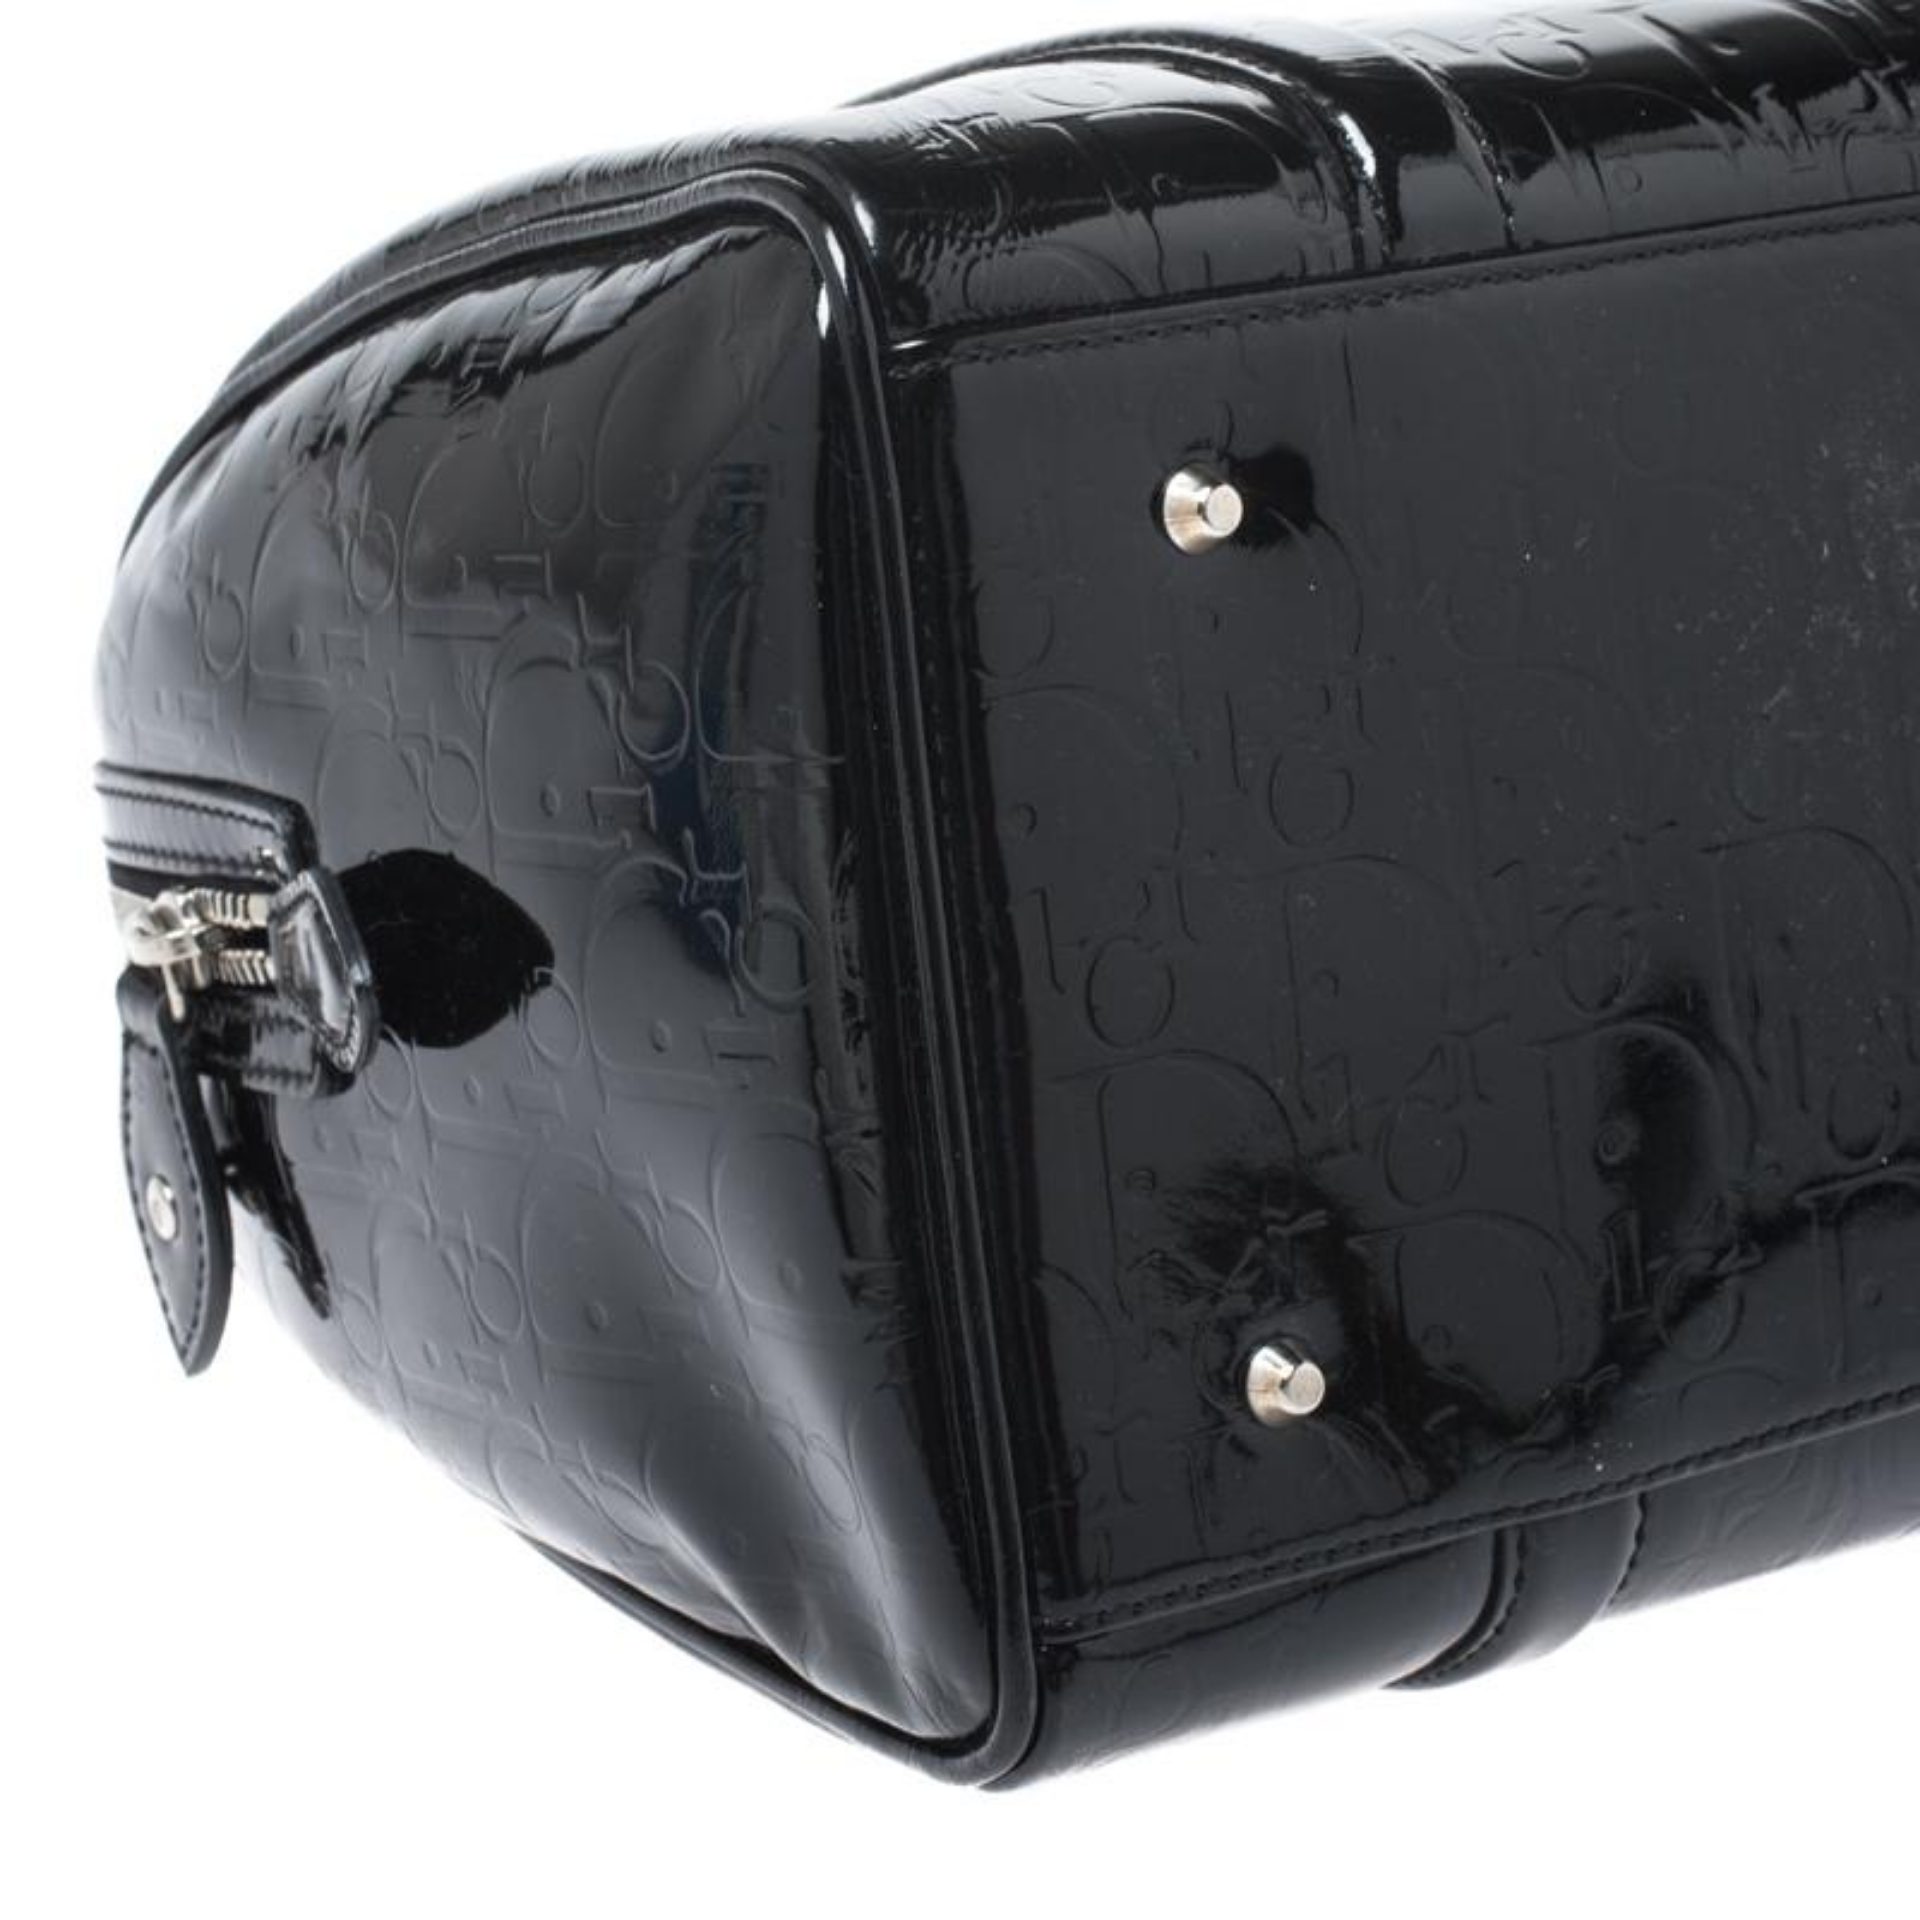 Dior Black Monogram Patent Leather Bowling Bag